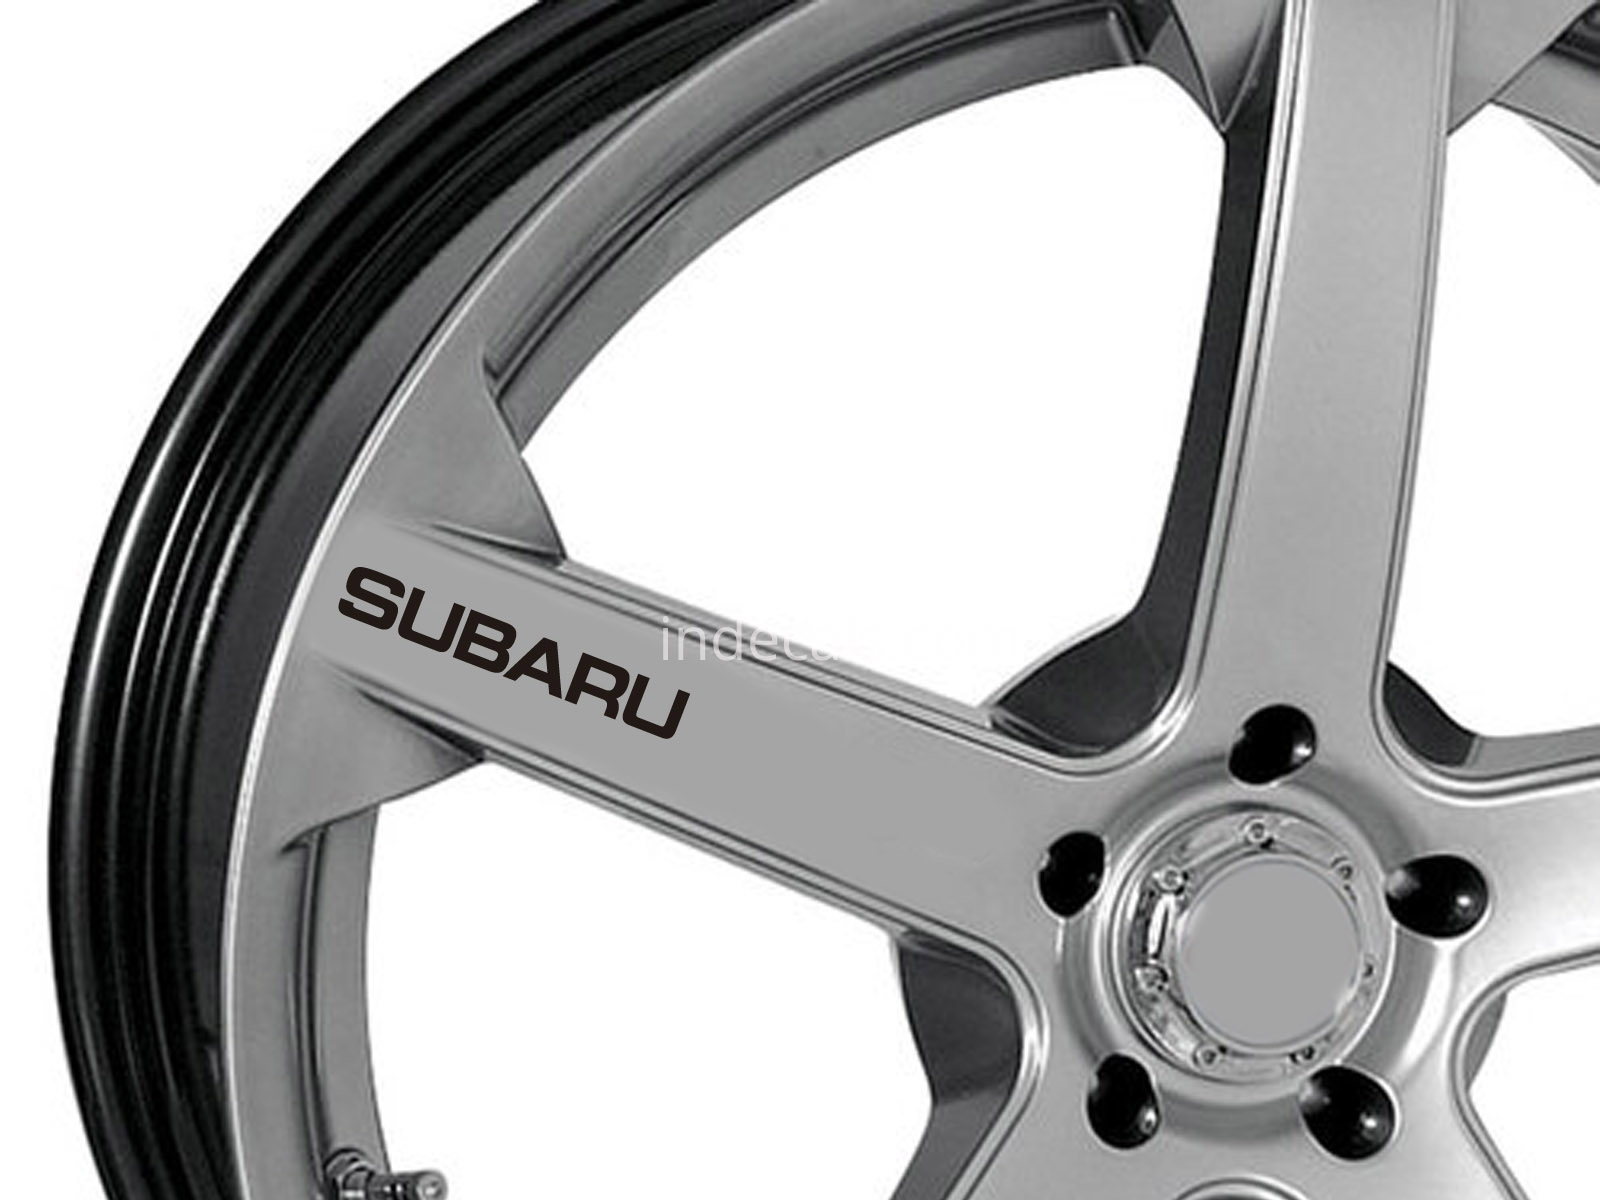 6 x Subaru Stickers for Wheels - Black